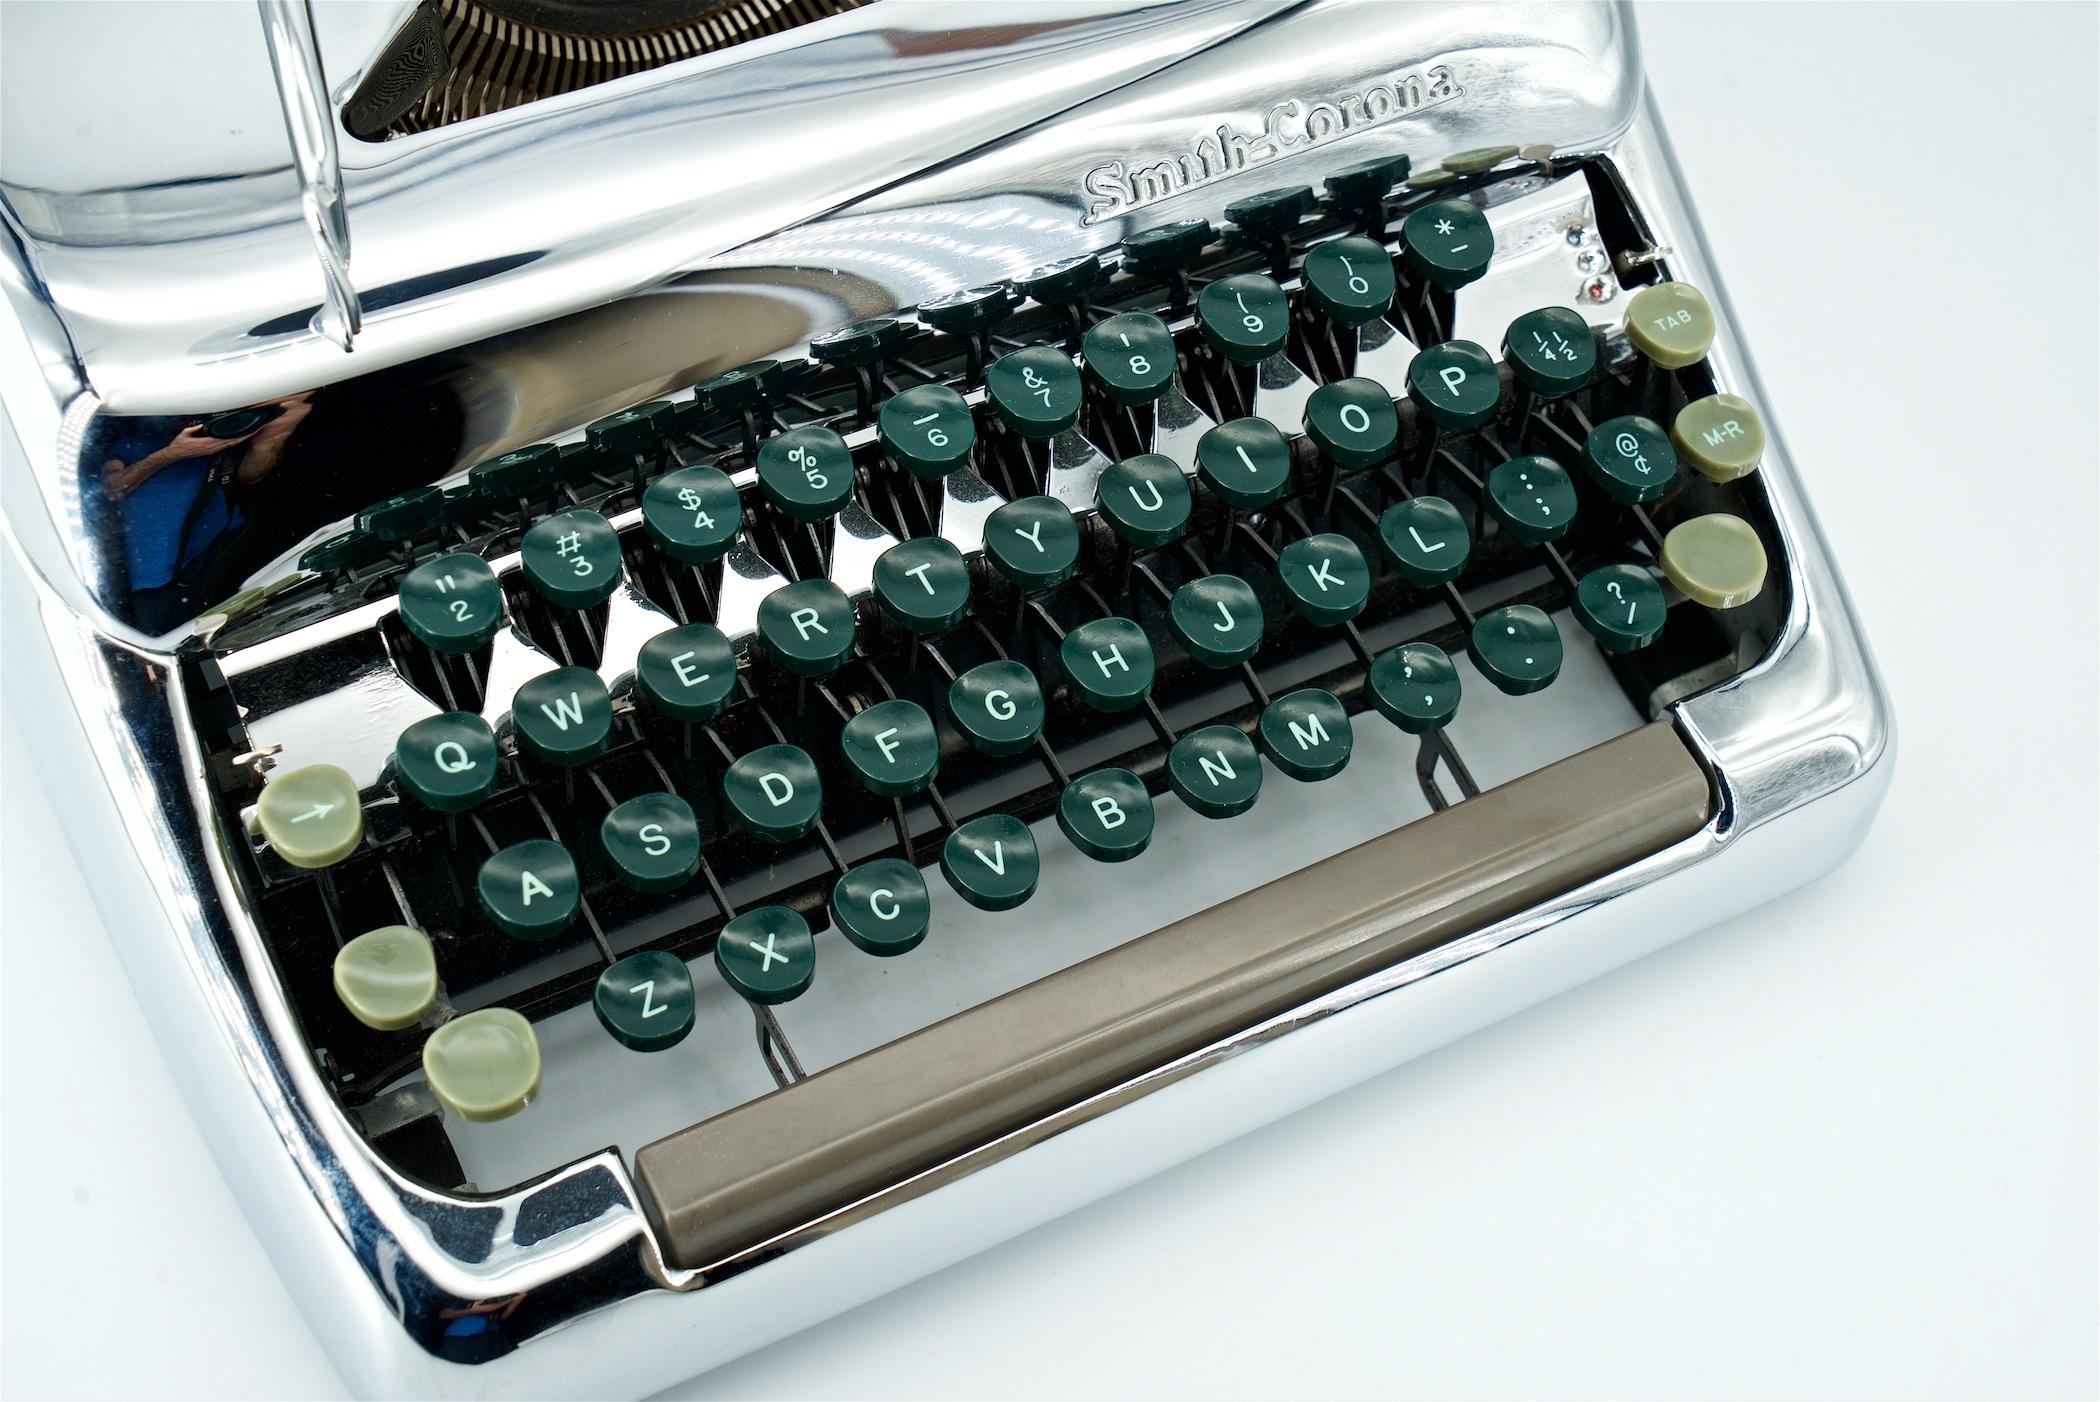 Machine-Made 1950s Smith Corona Sterling Typewriter Chrome Space Age Analog Sci-Fi Chromepunk